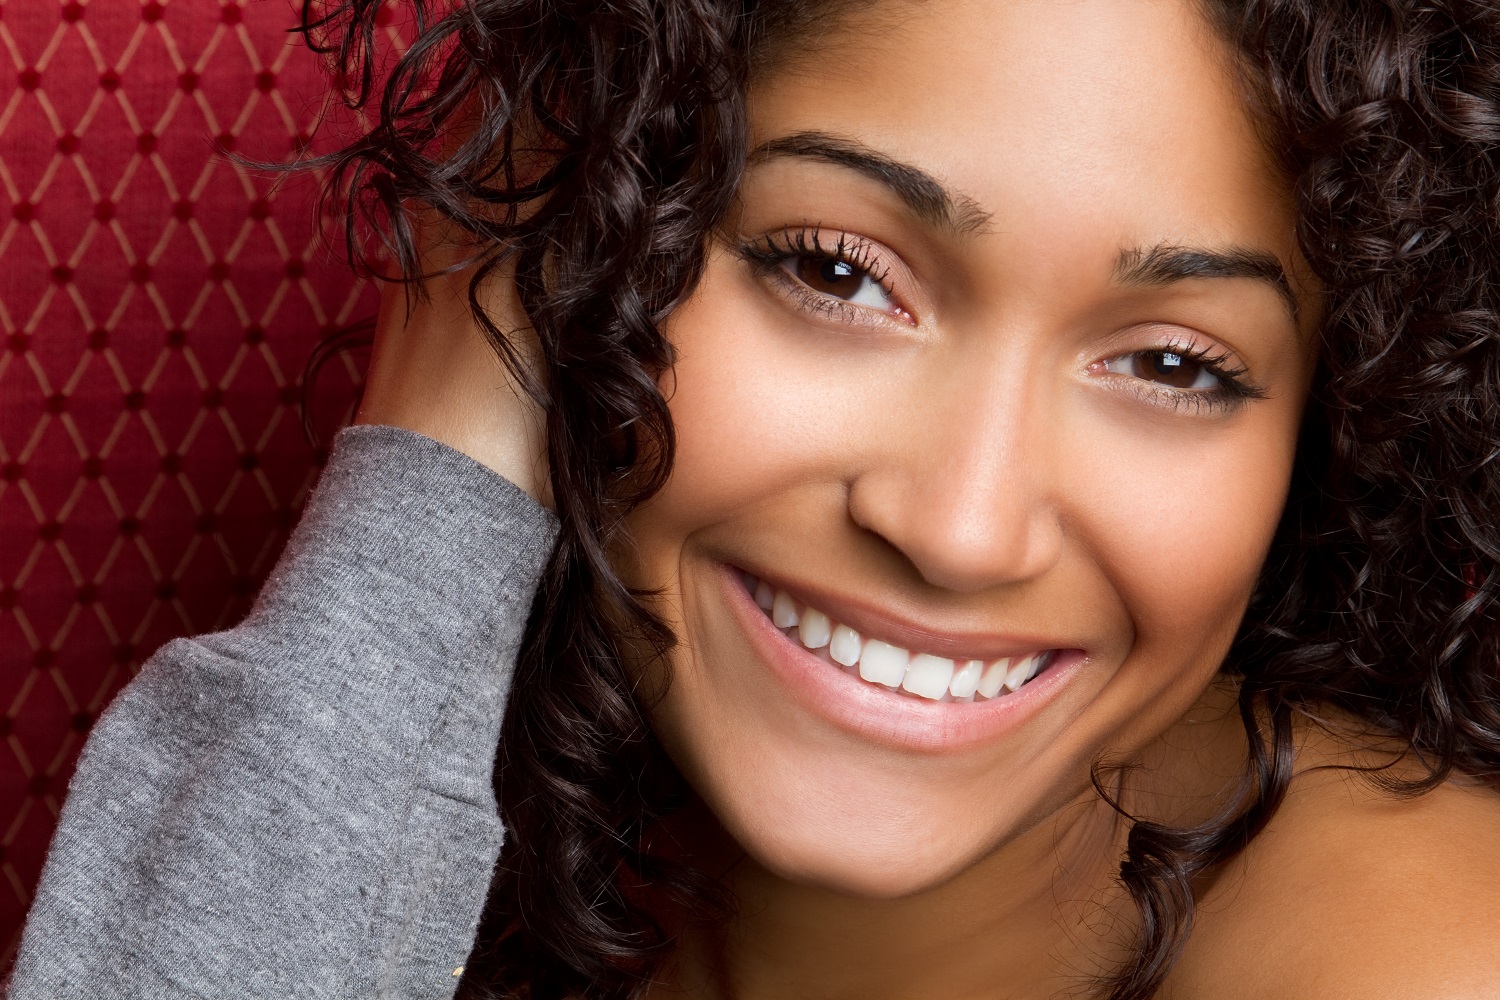 Beautiful smiling black woman